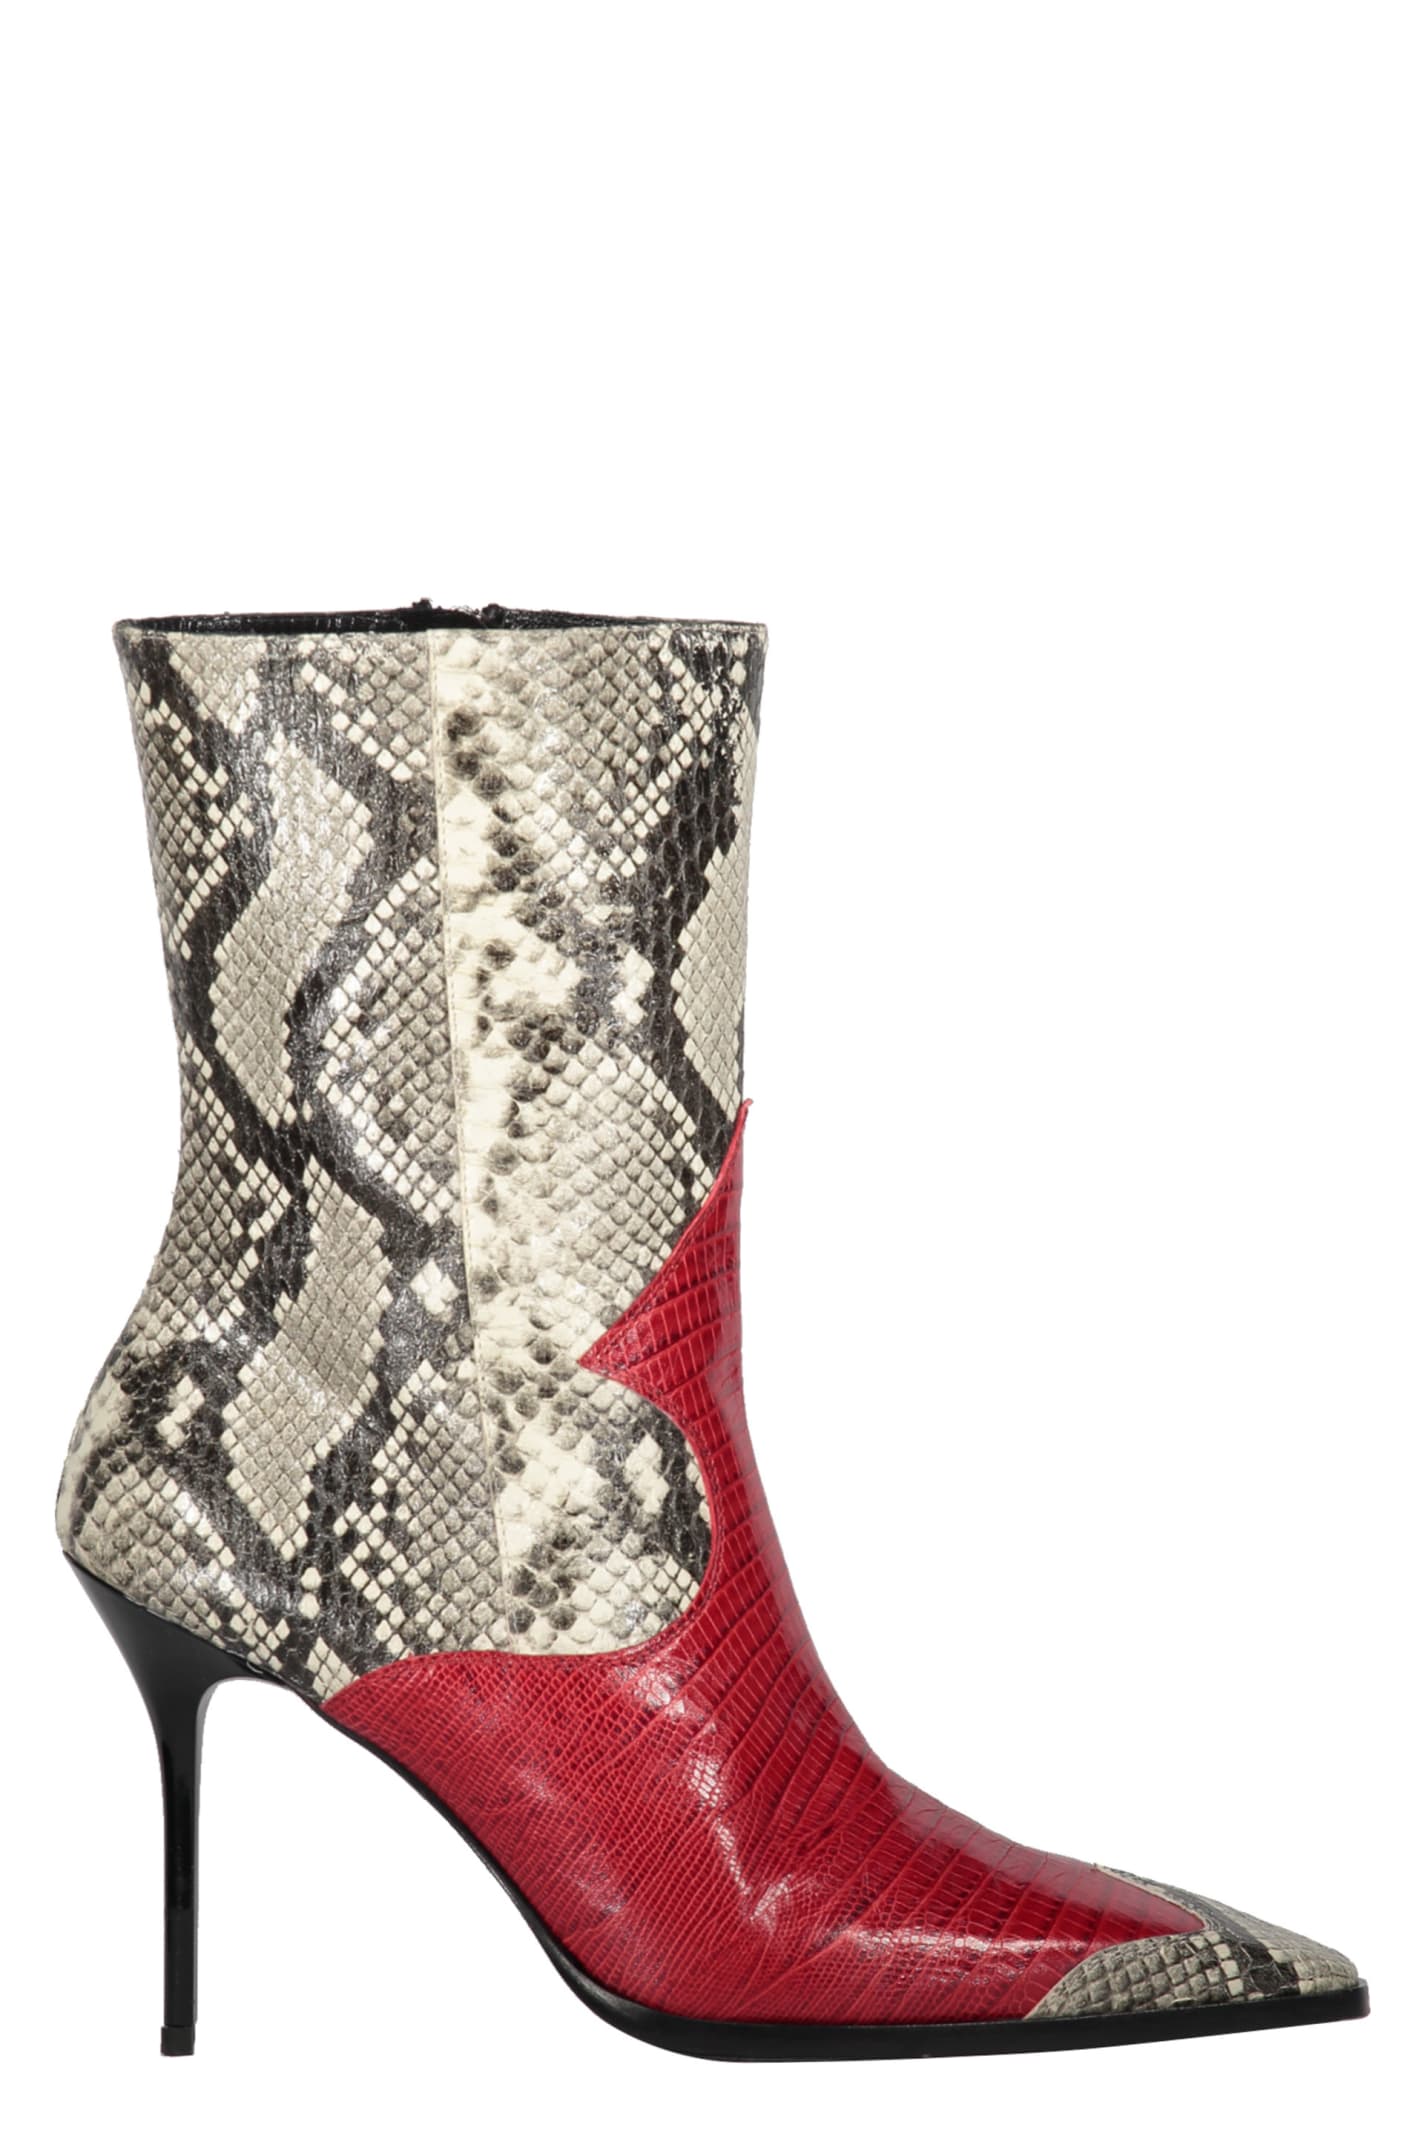 Snakeskin Print Heels Ankle Boots